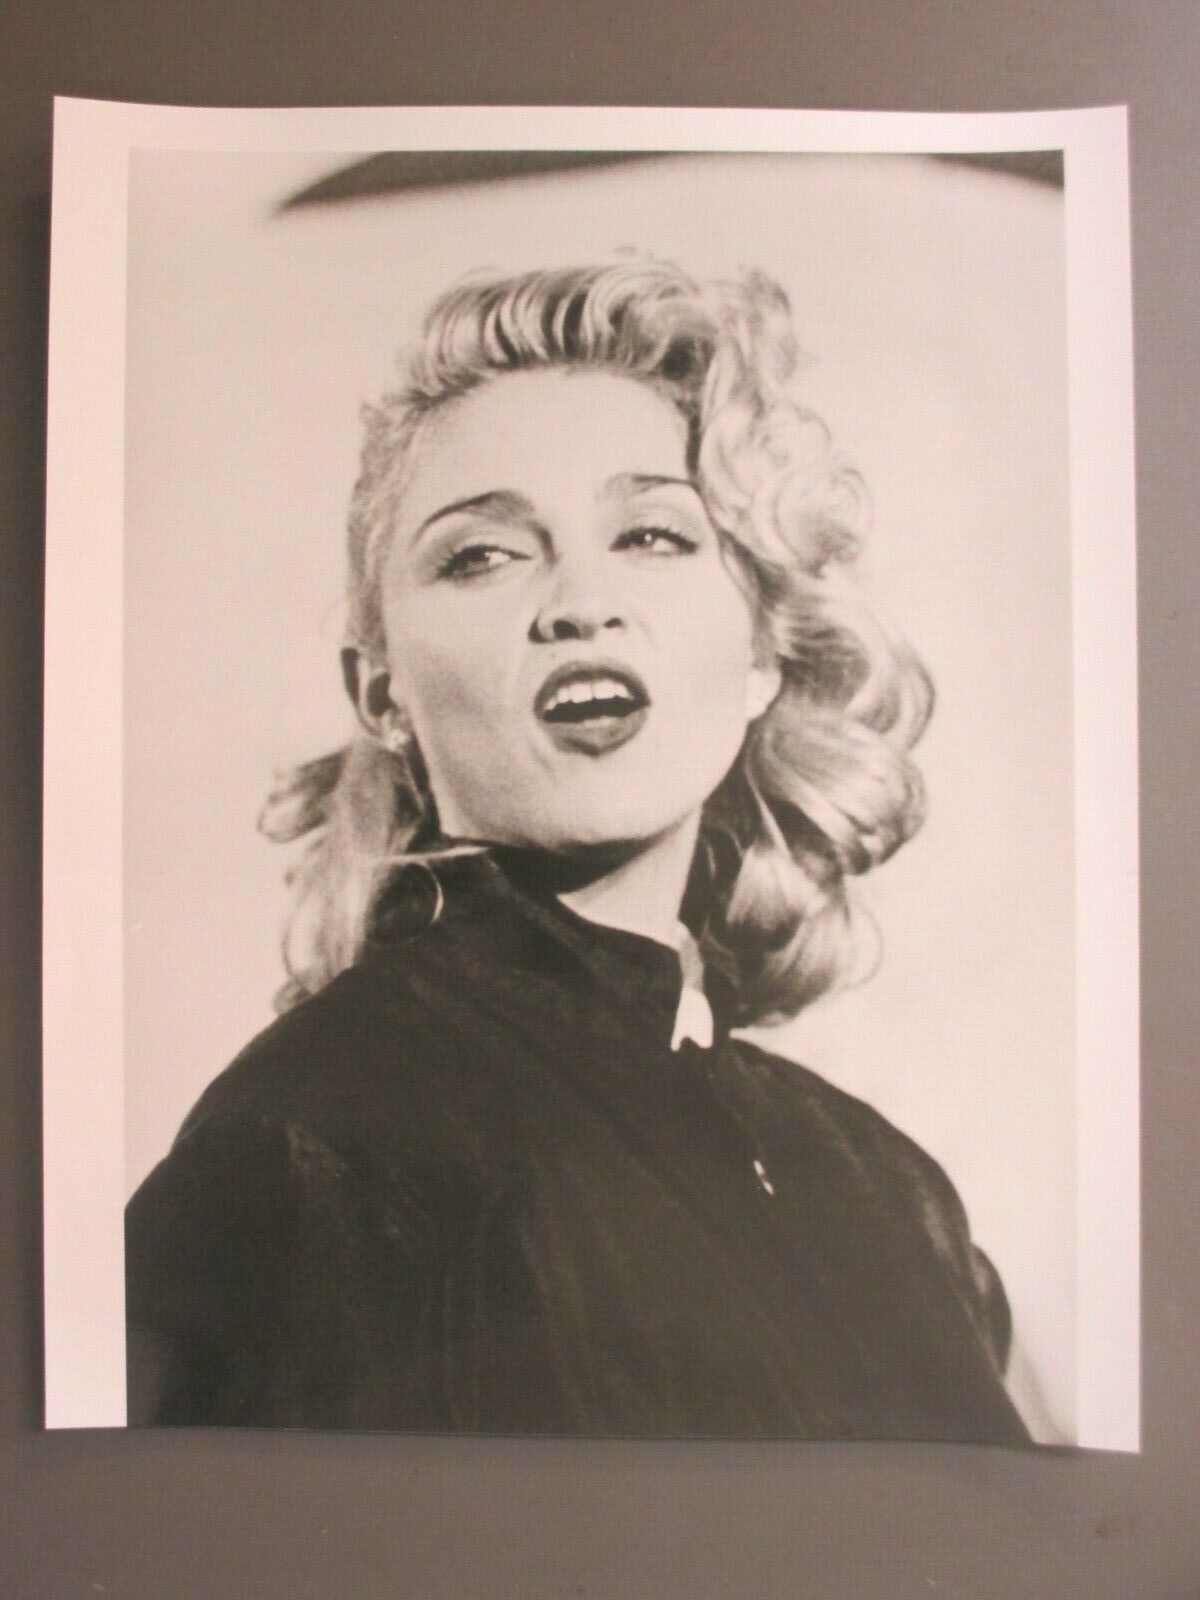 Madonna Black & White 8x10 Glossy Promo Photo 1993 - Looking Like Marilyn